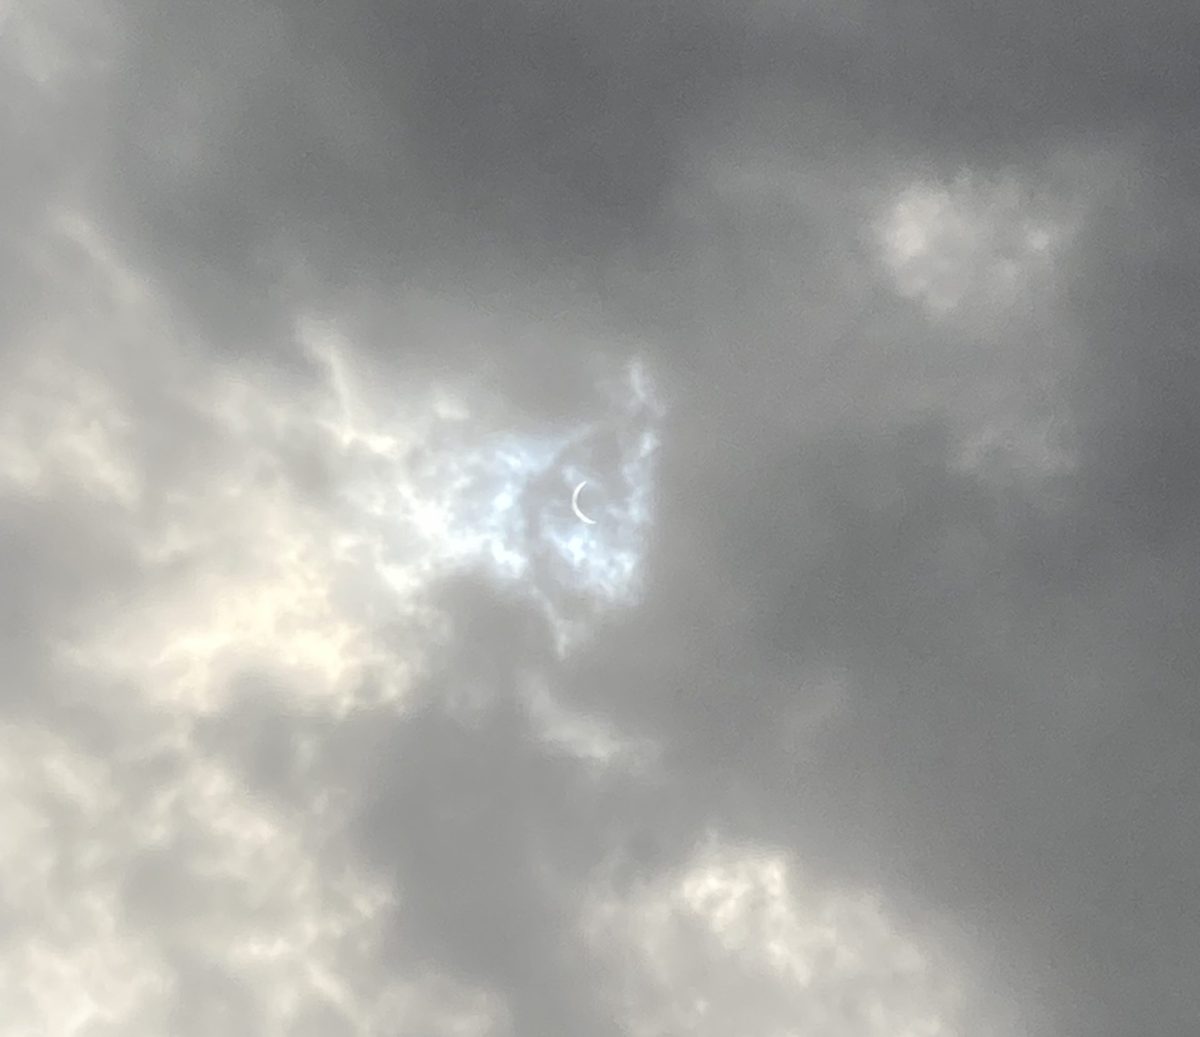 Clouds obscure a 90% eclipse